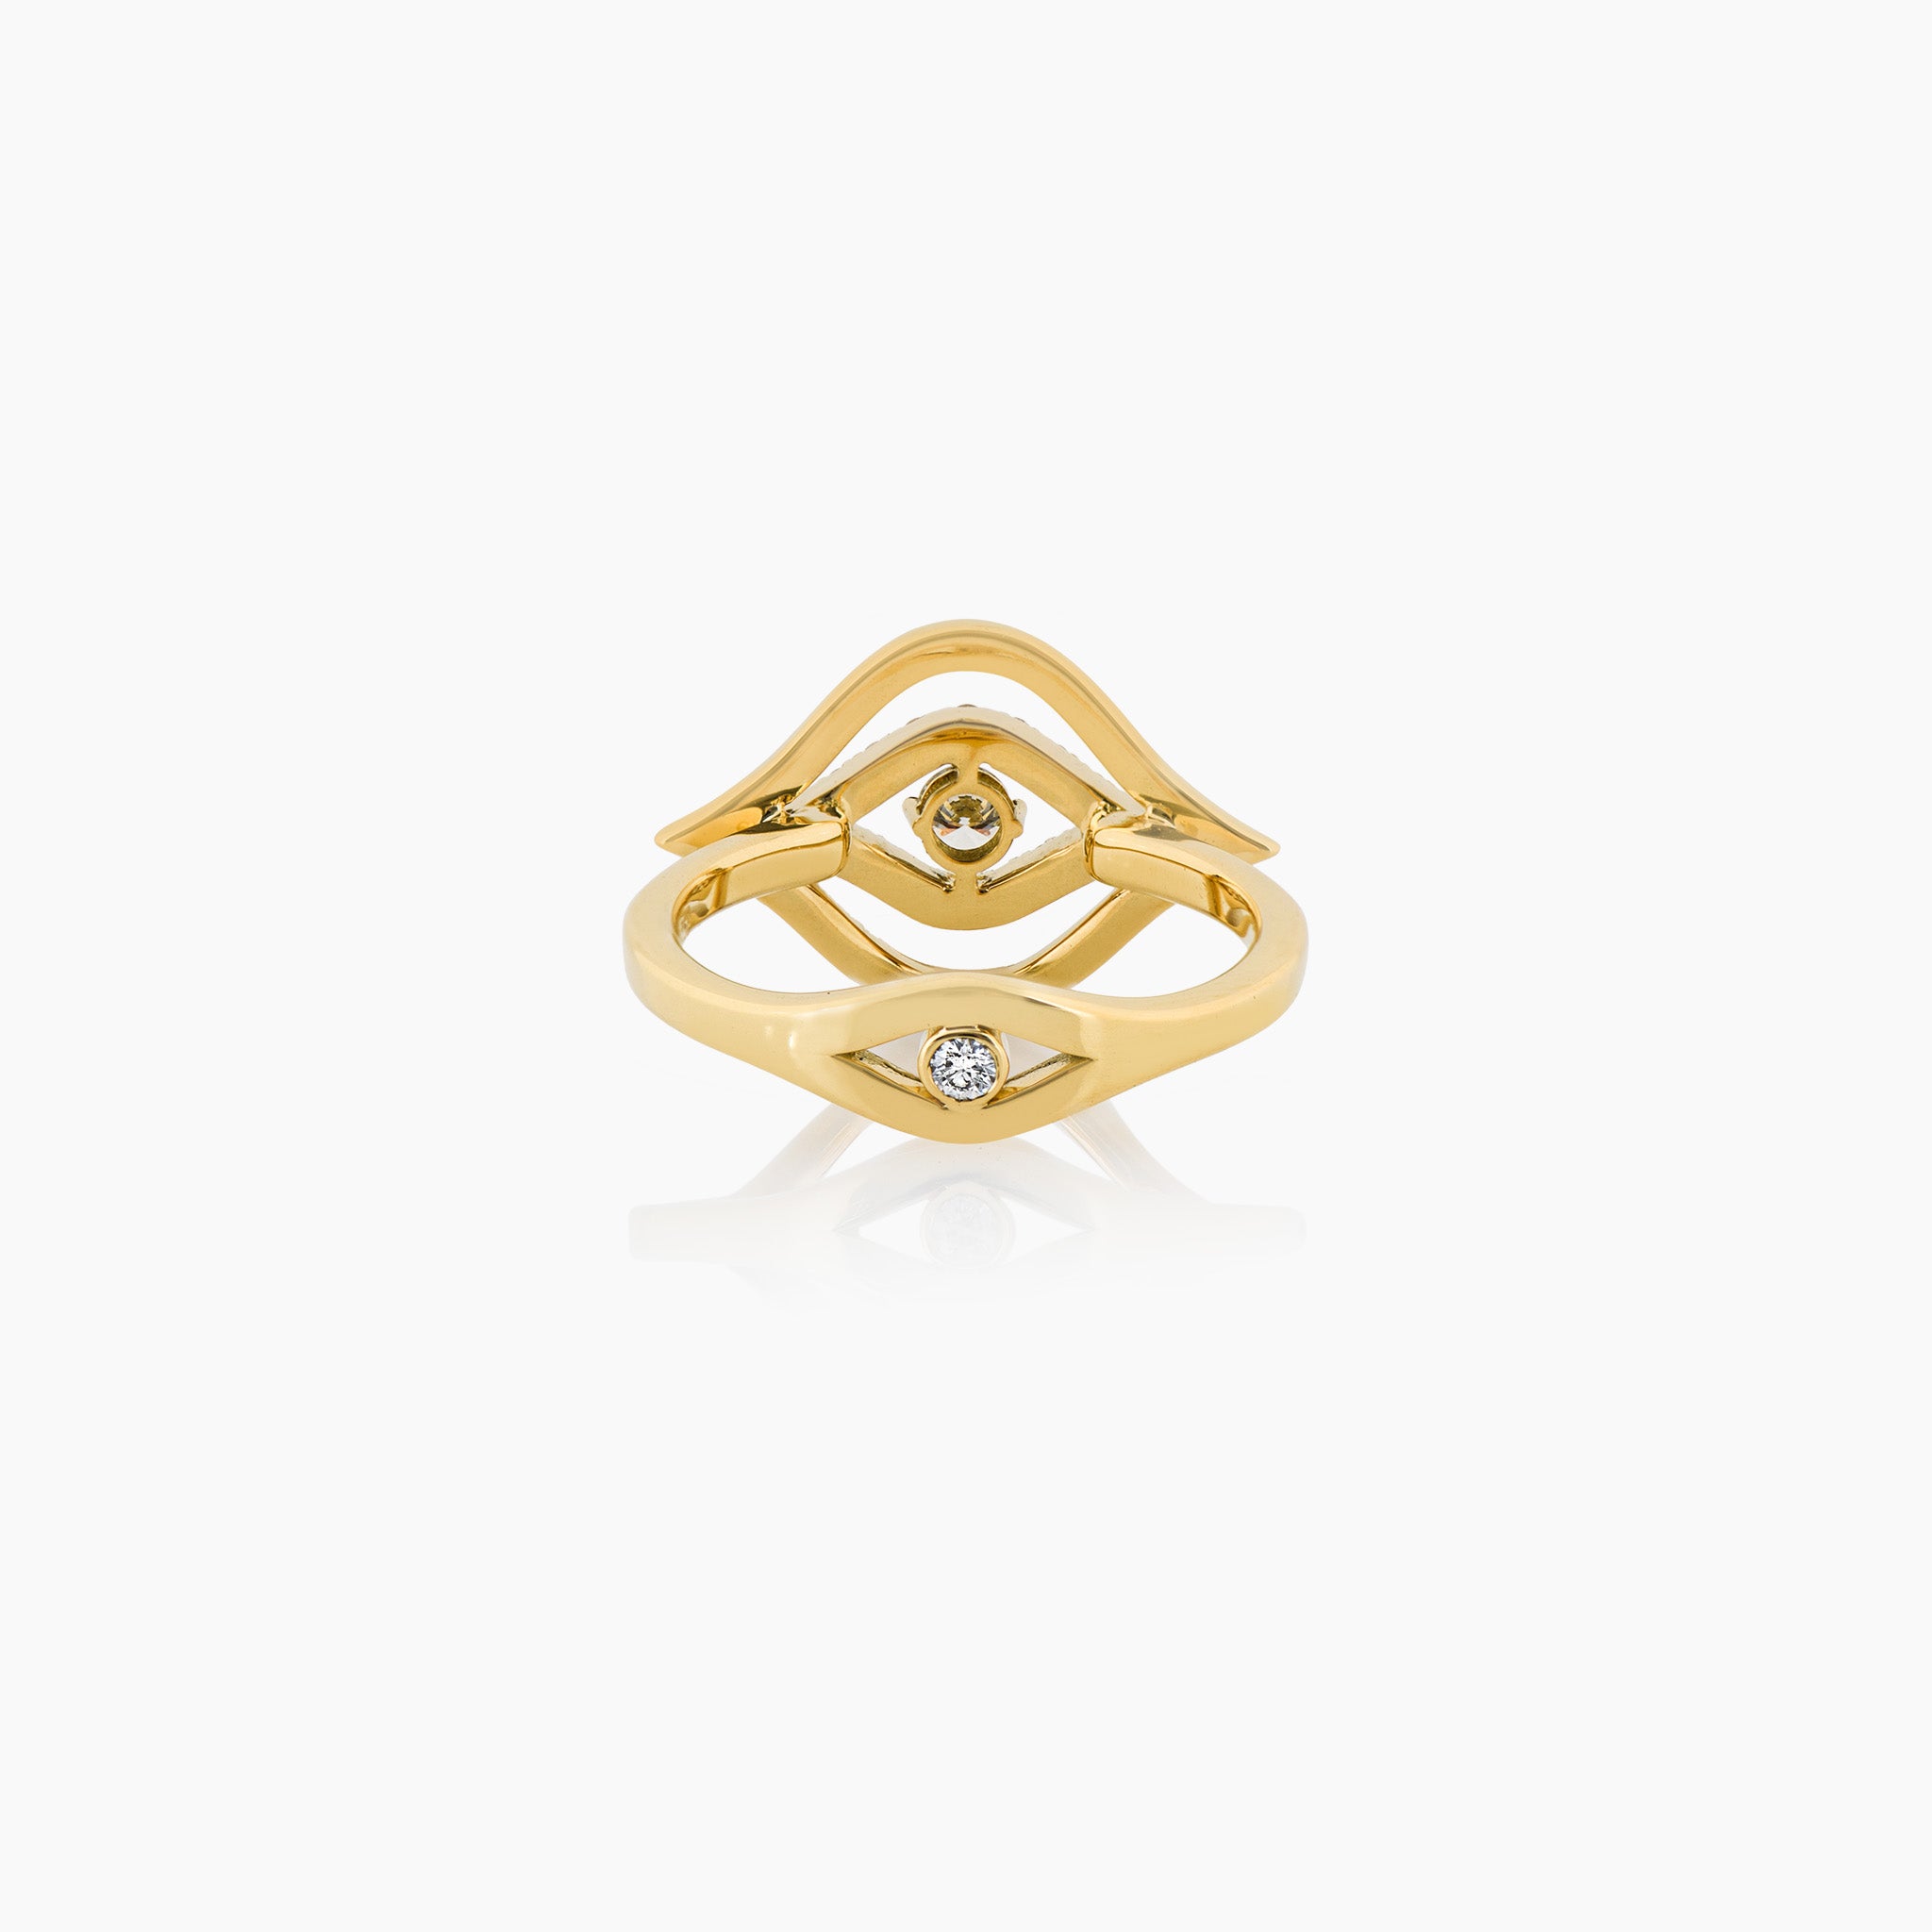 Evil Eye Diamond Ring: A captivating diamond-studded Evil Eye ring, displayed on an off-white background.